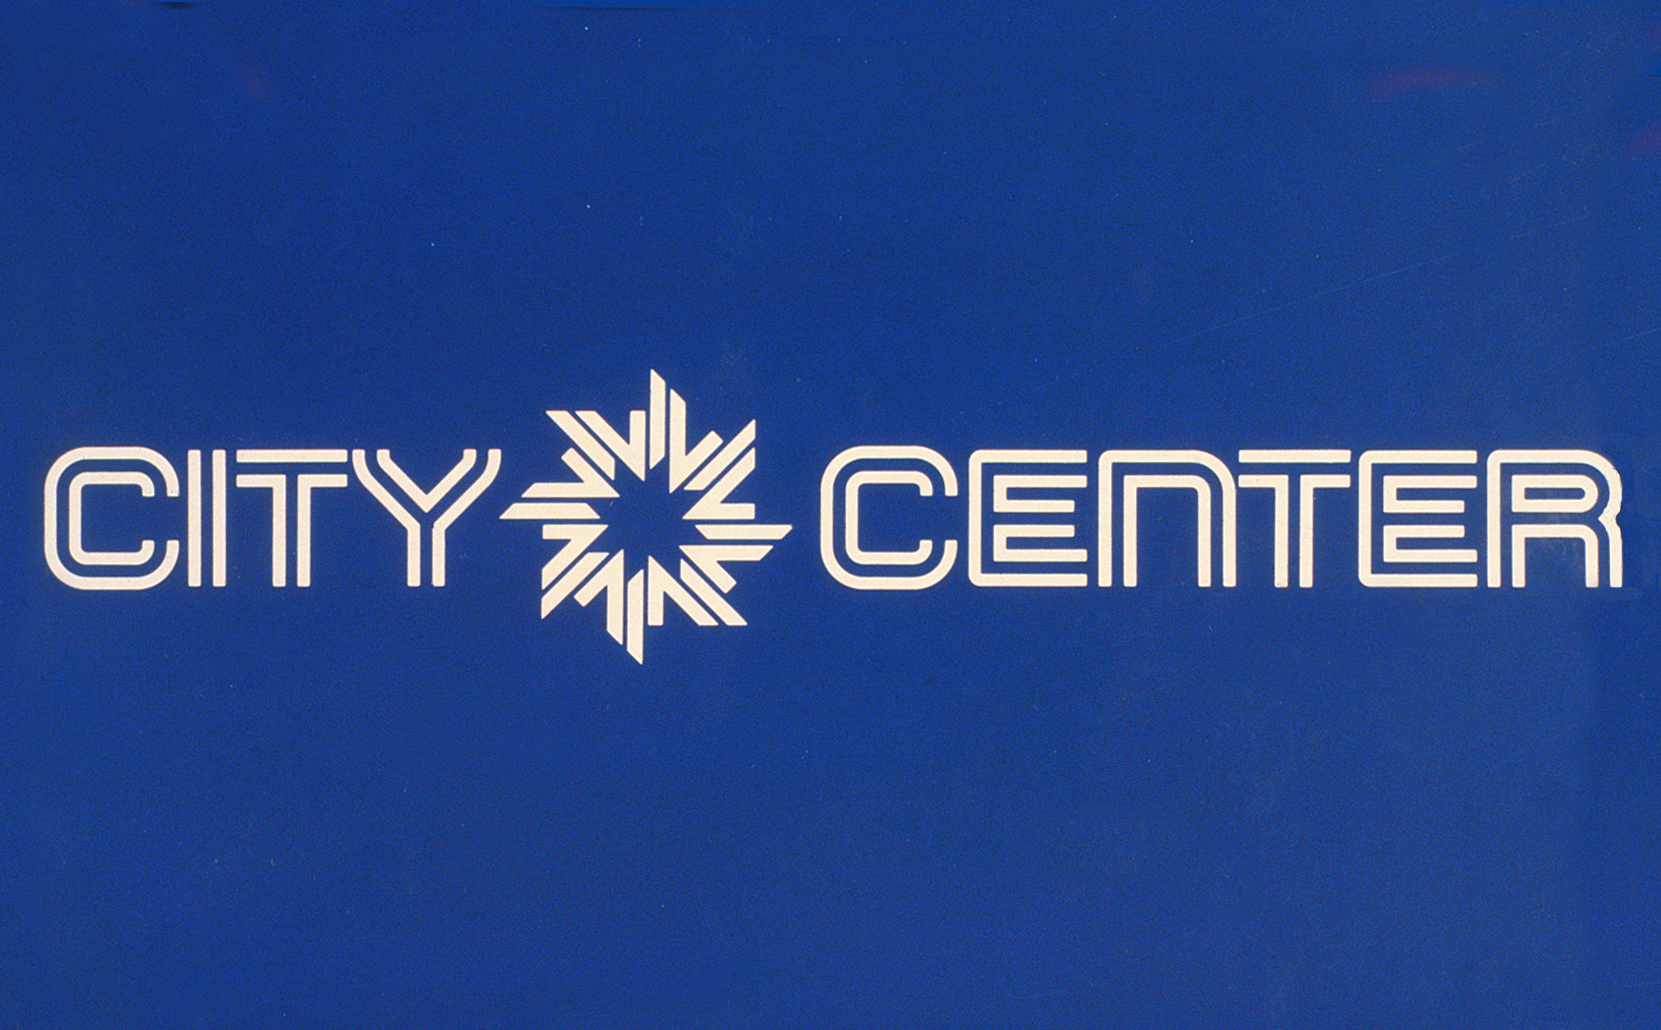 Minneapolis City Center logo and typeface signature.